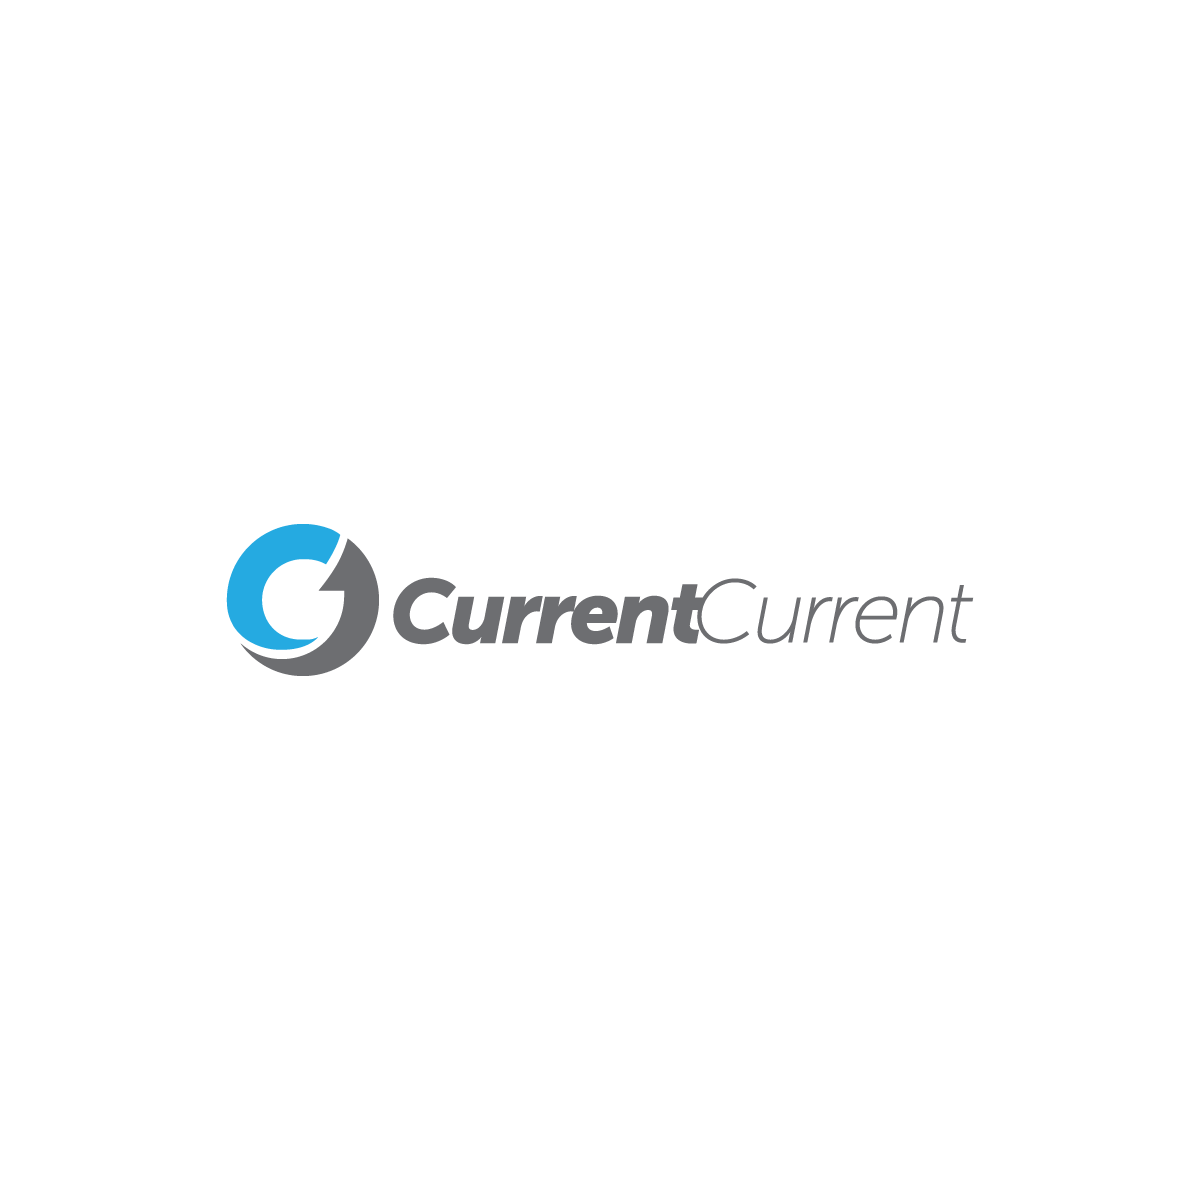 Current Logo - Current Current Logo Design